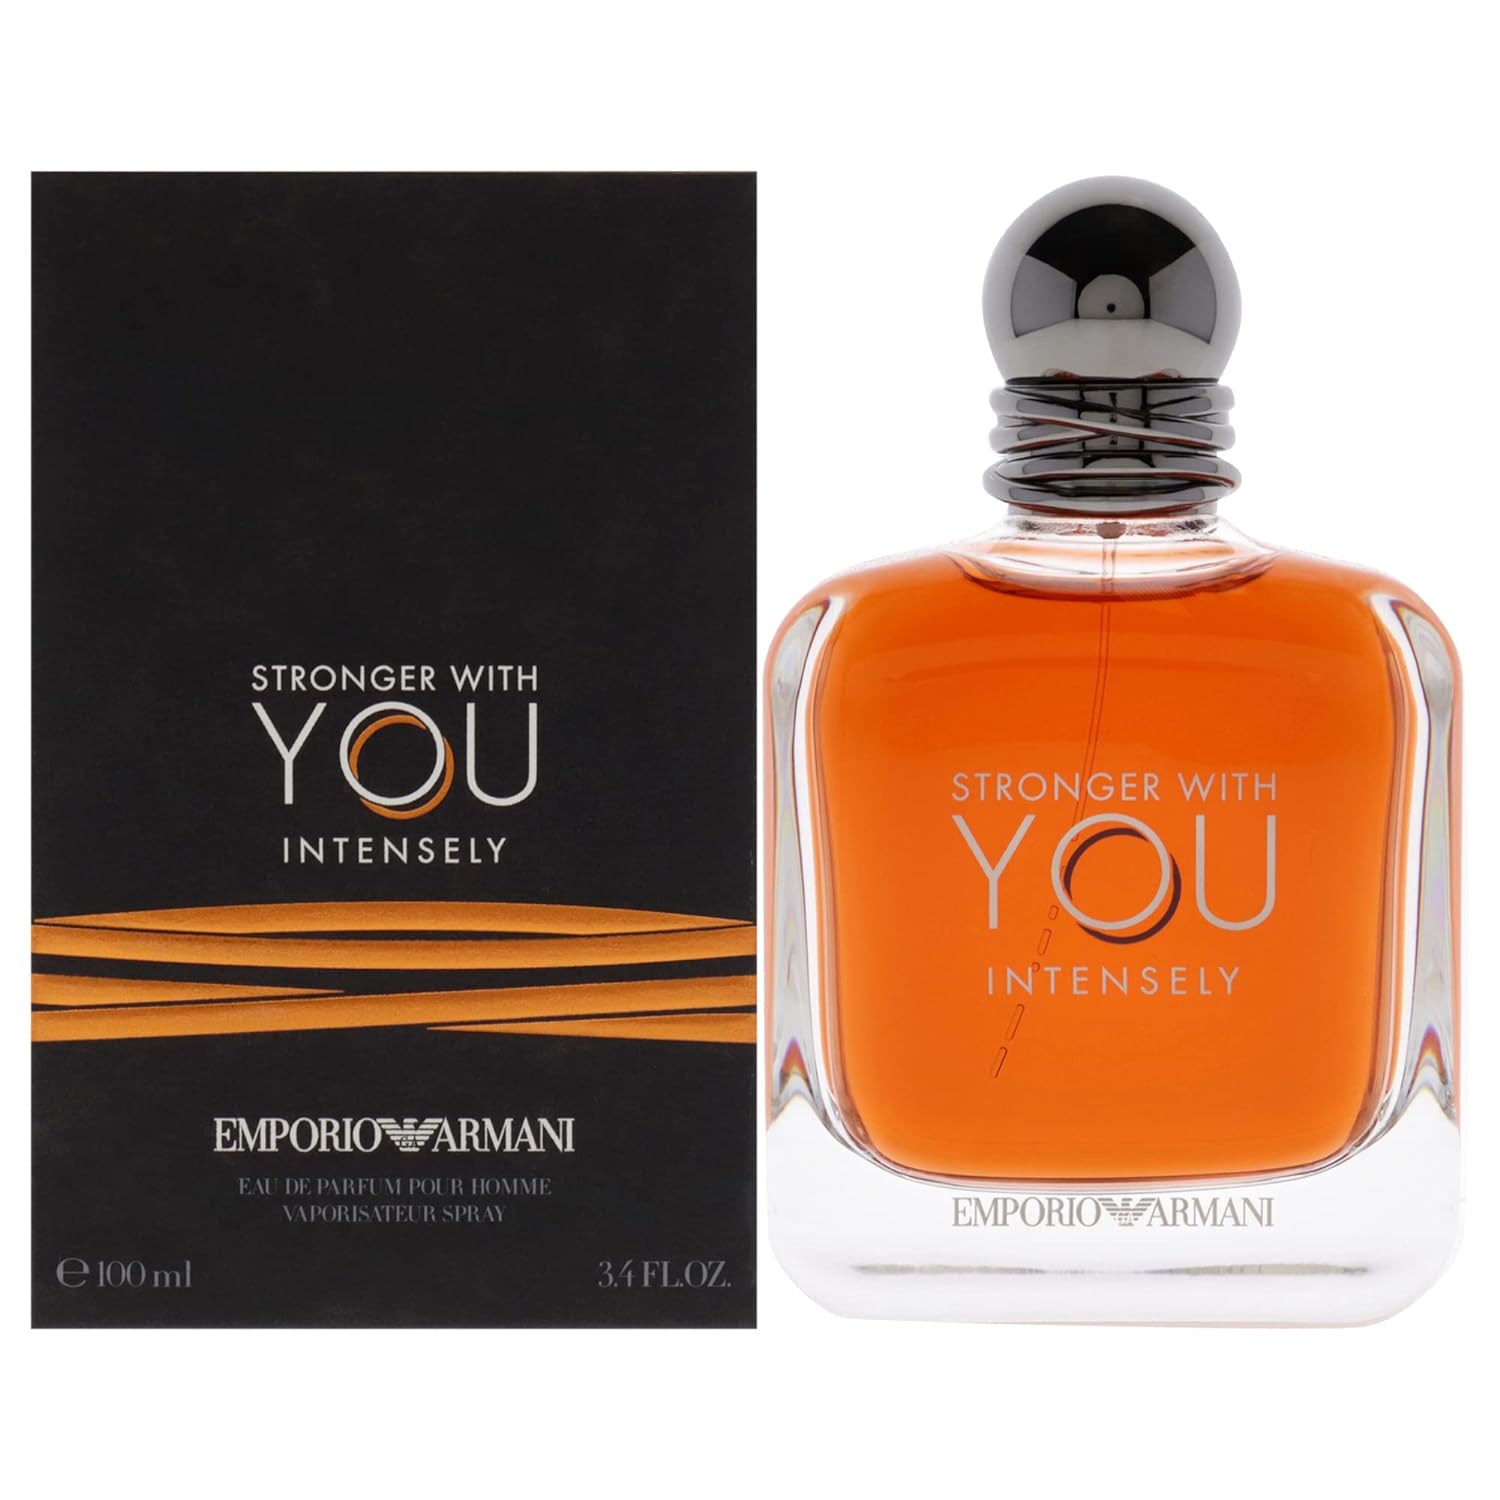 GIORGIO ARMANI Emperior Armani Stronger With You Intensely Perfume For Men